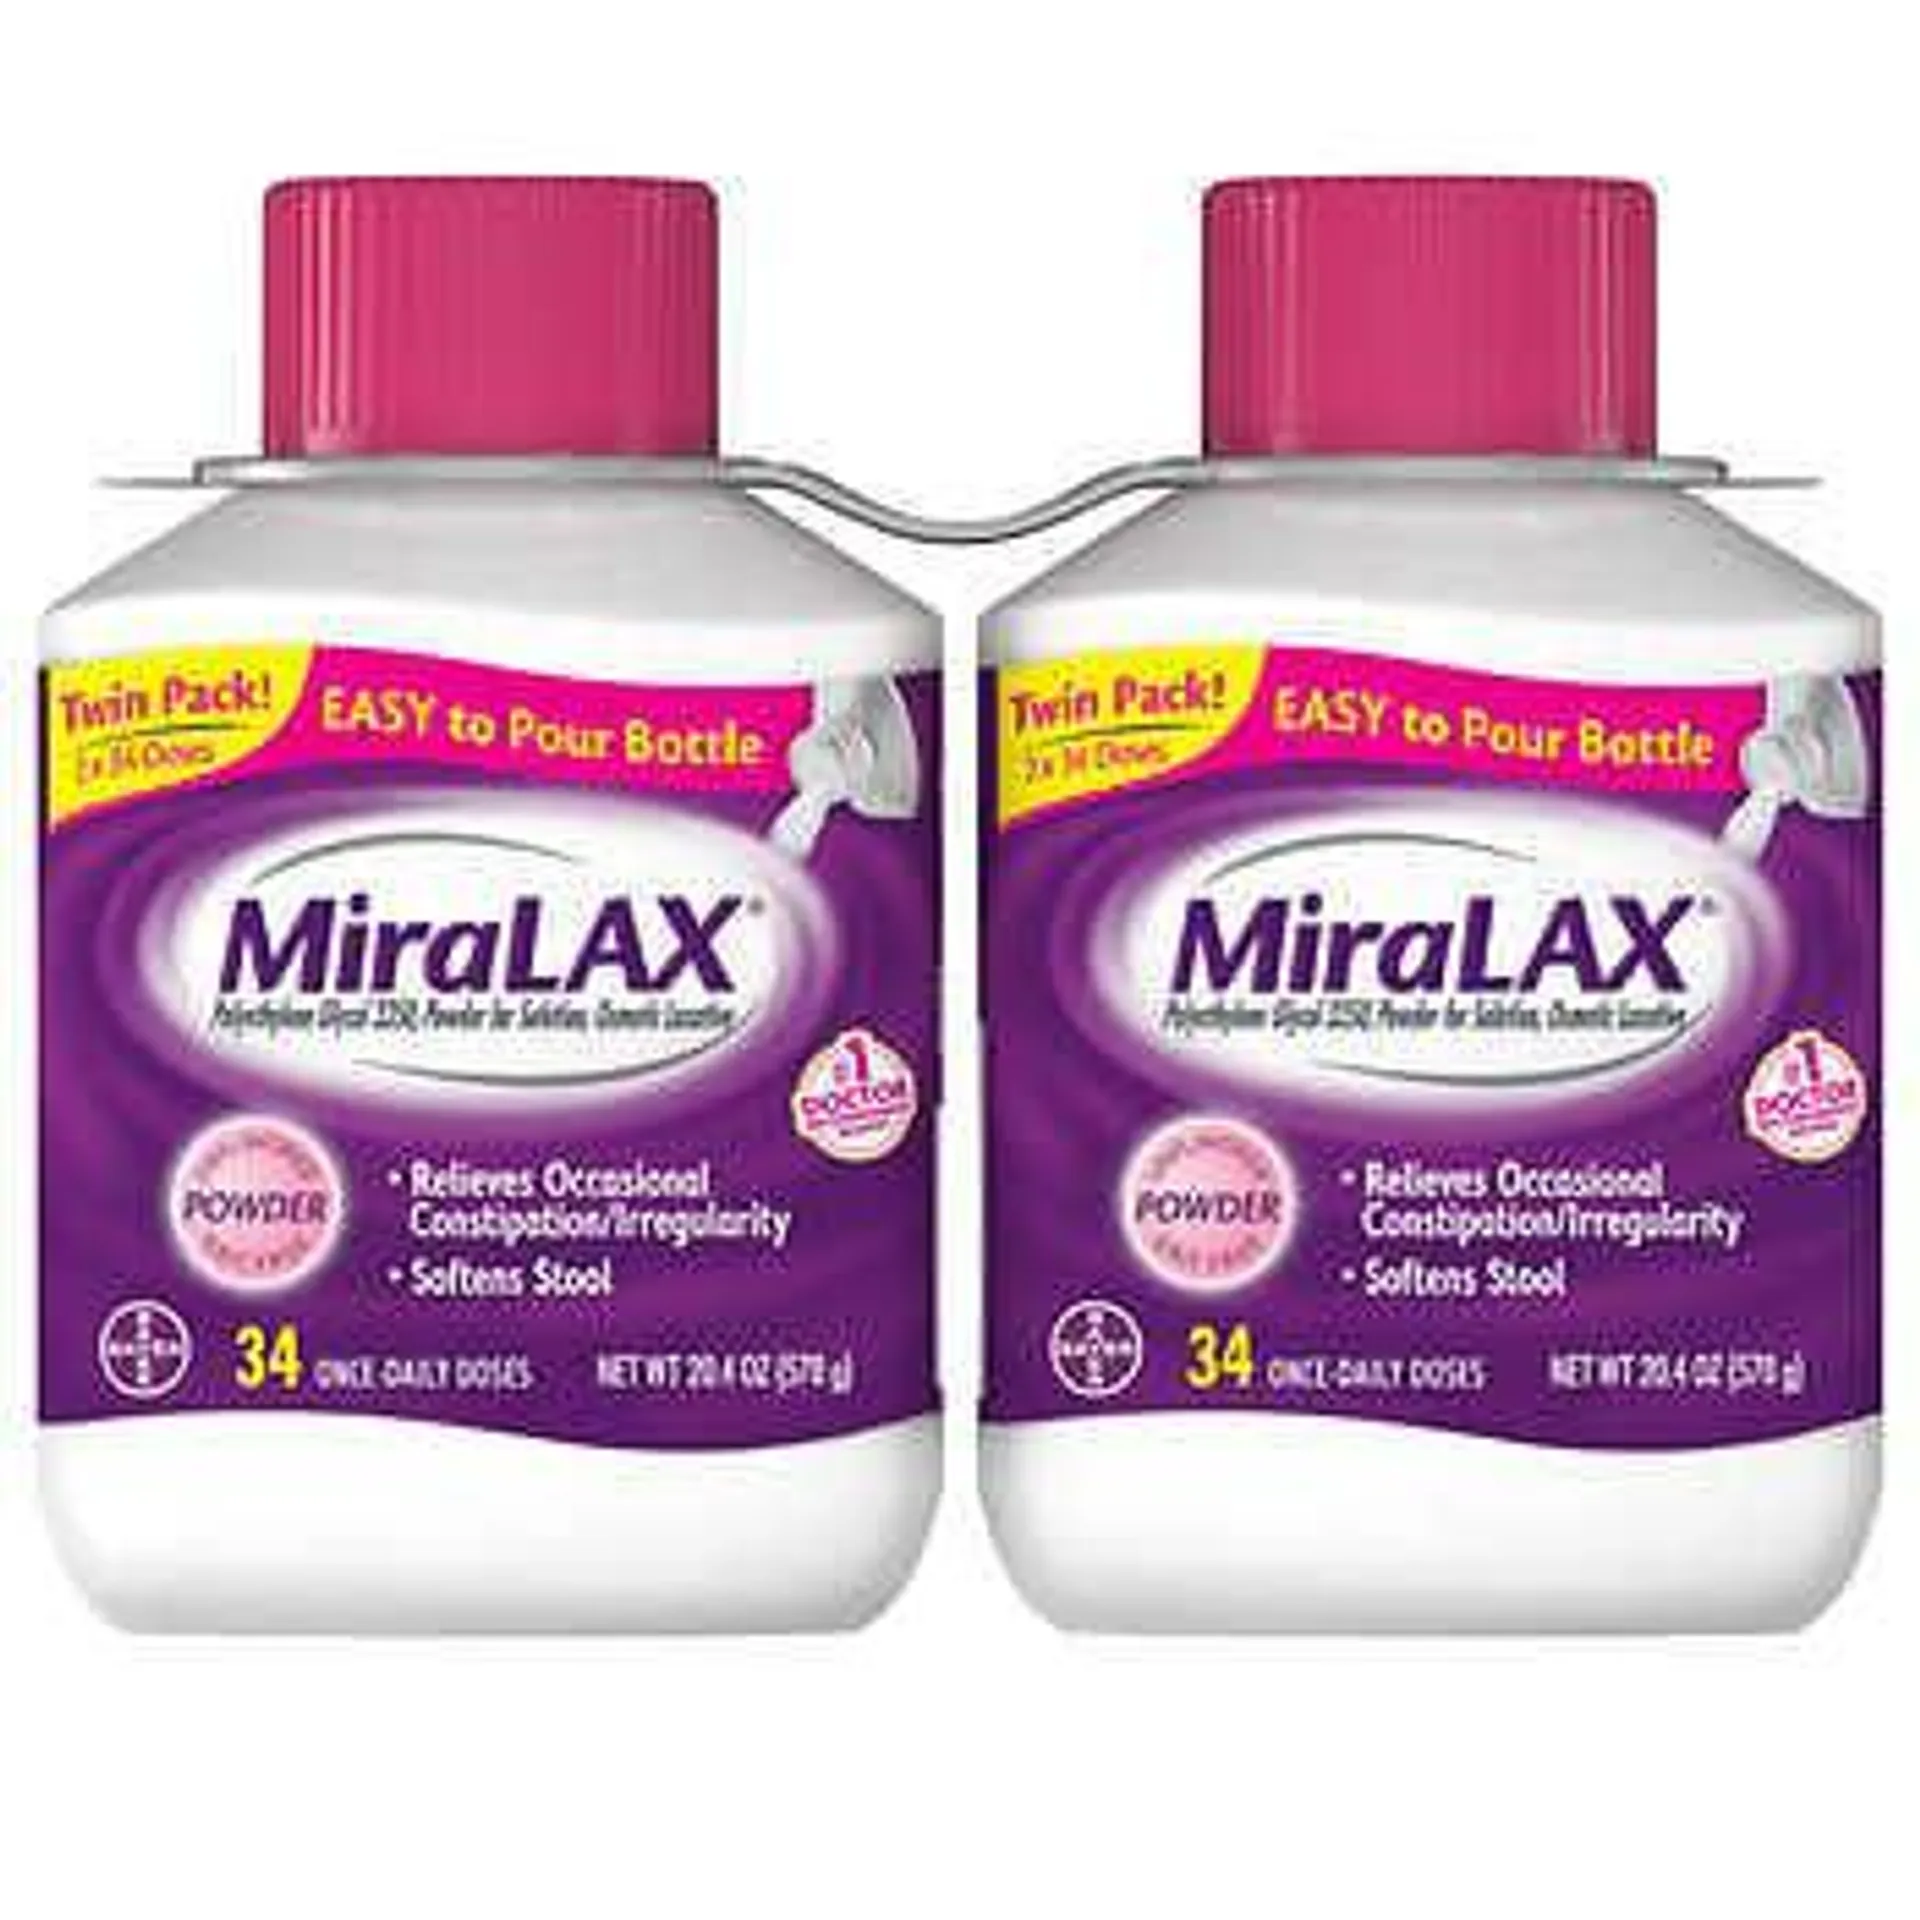 MiraLAX Powder Laxative, 68 Doses